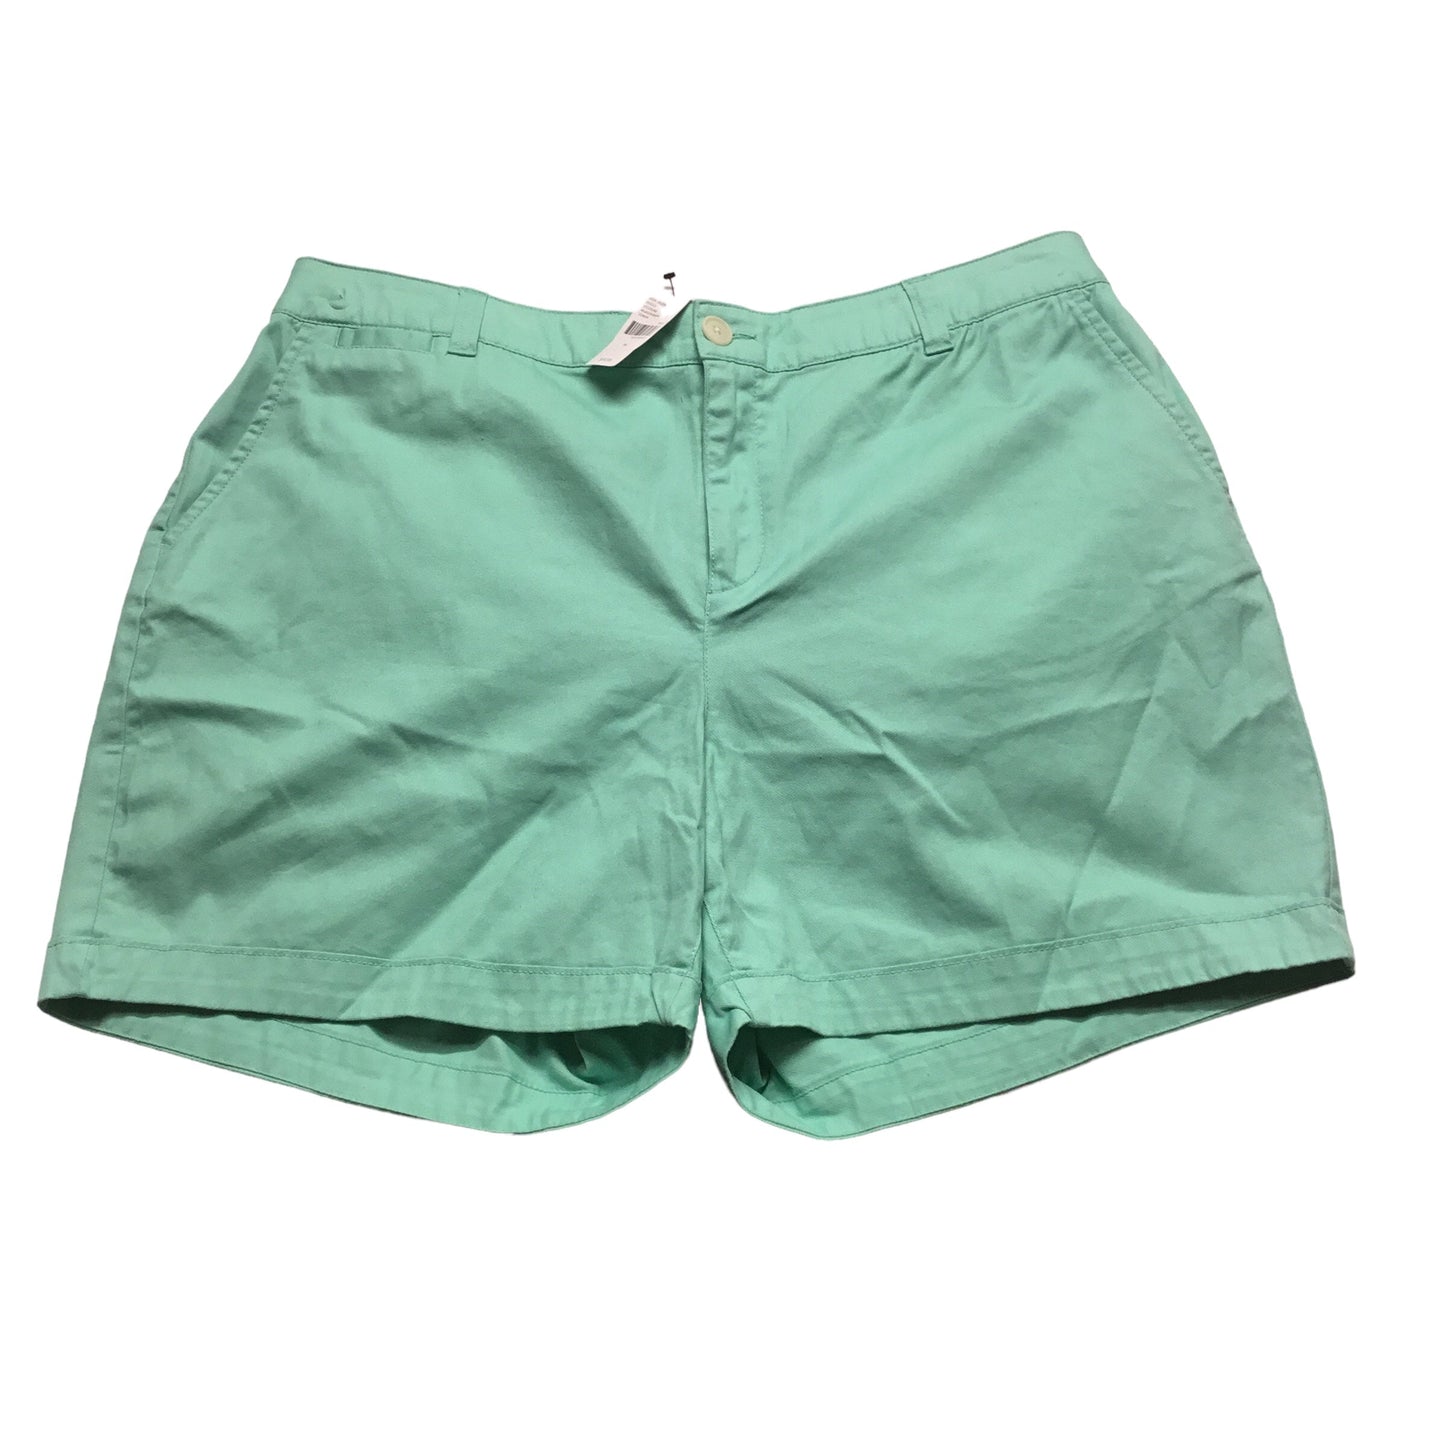 Green Shorts Lane Bryant, Size 16